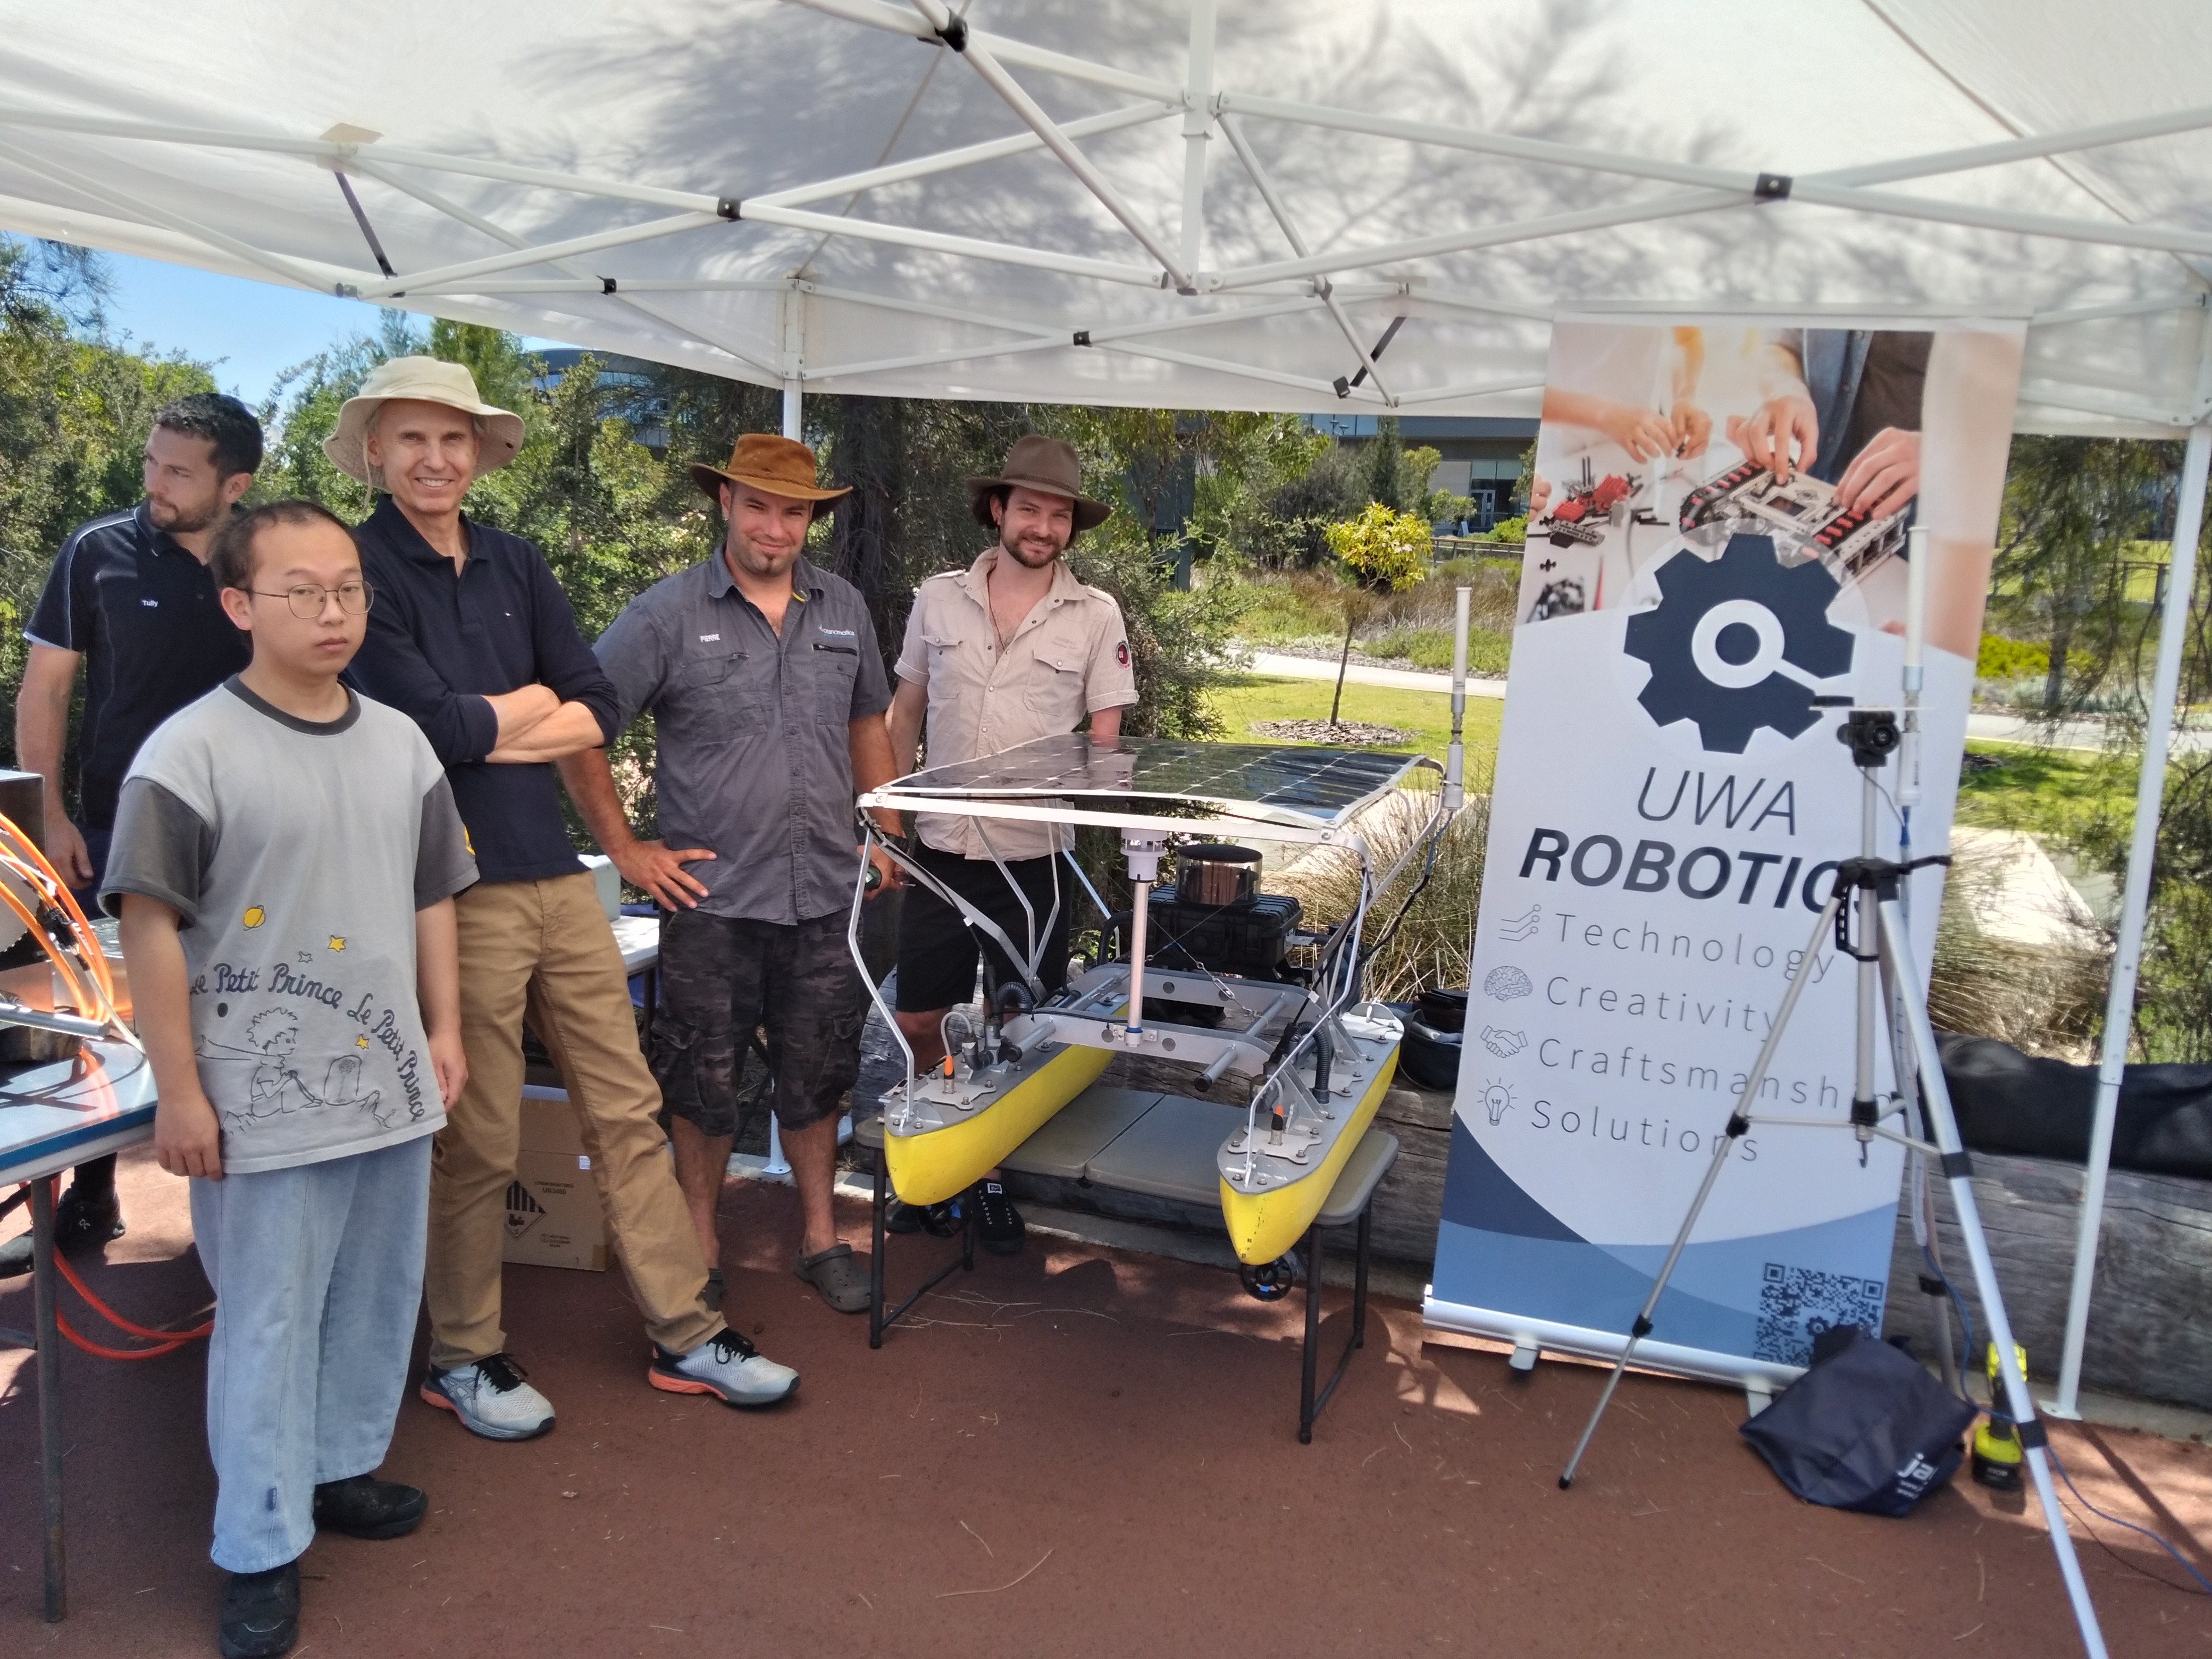 The UWA Robotics team show off their autonomous watercraft